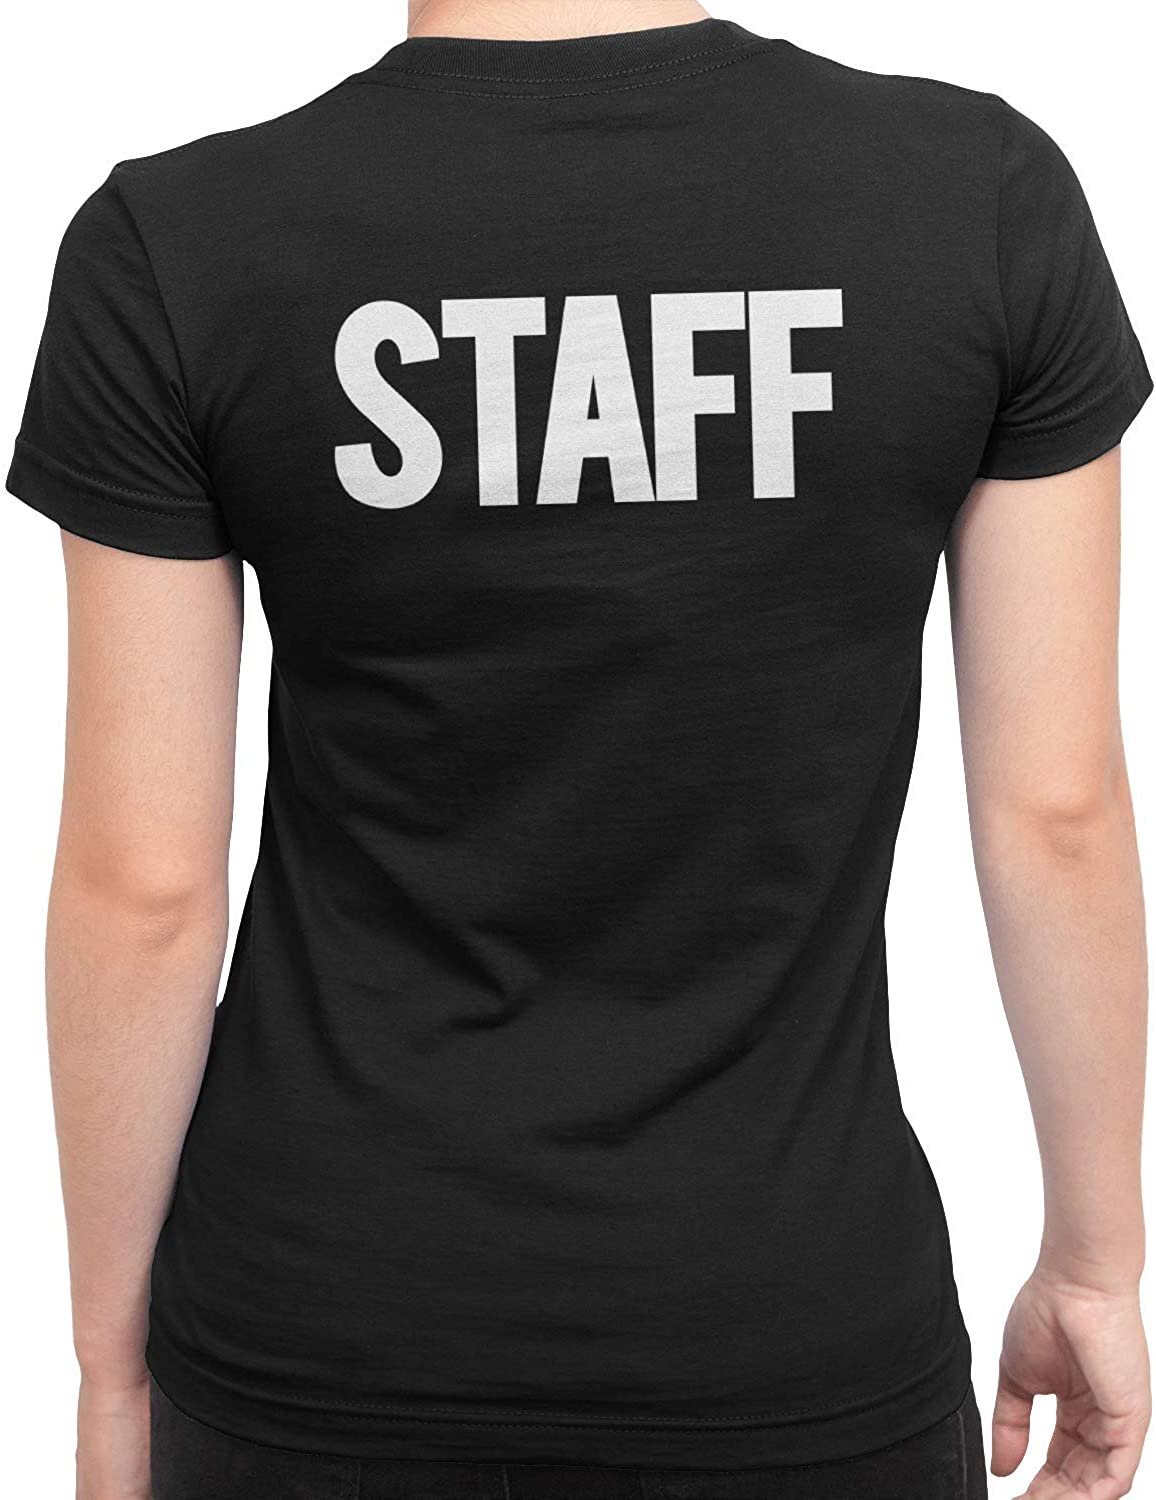 Staff Ladies Short Sleeve T-Shirt (Solid Design, Black)